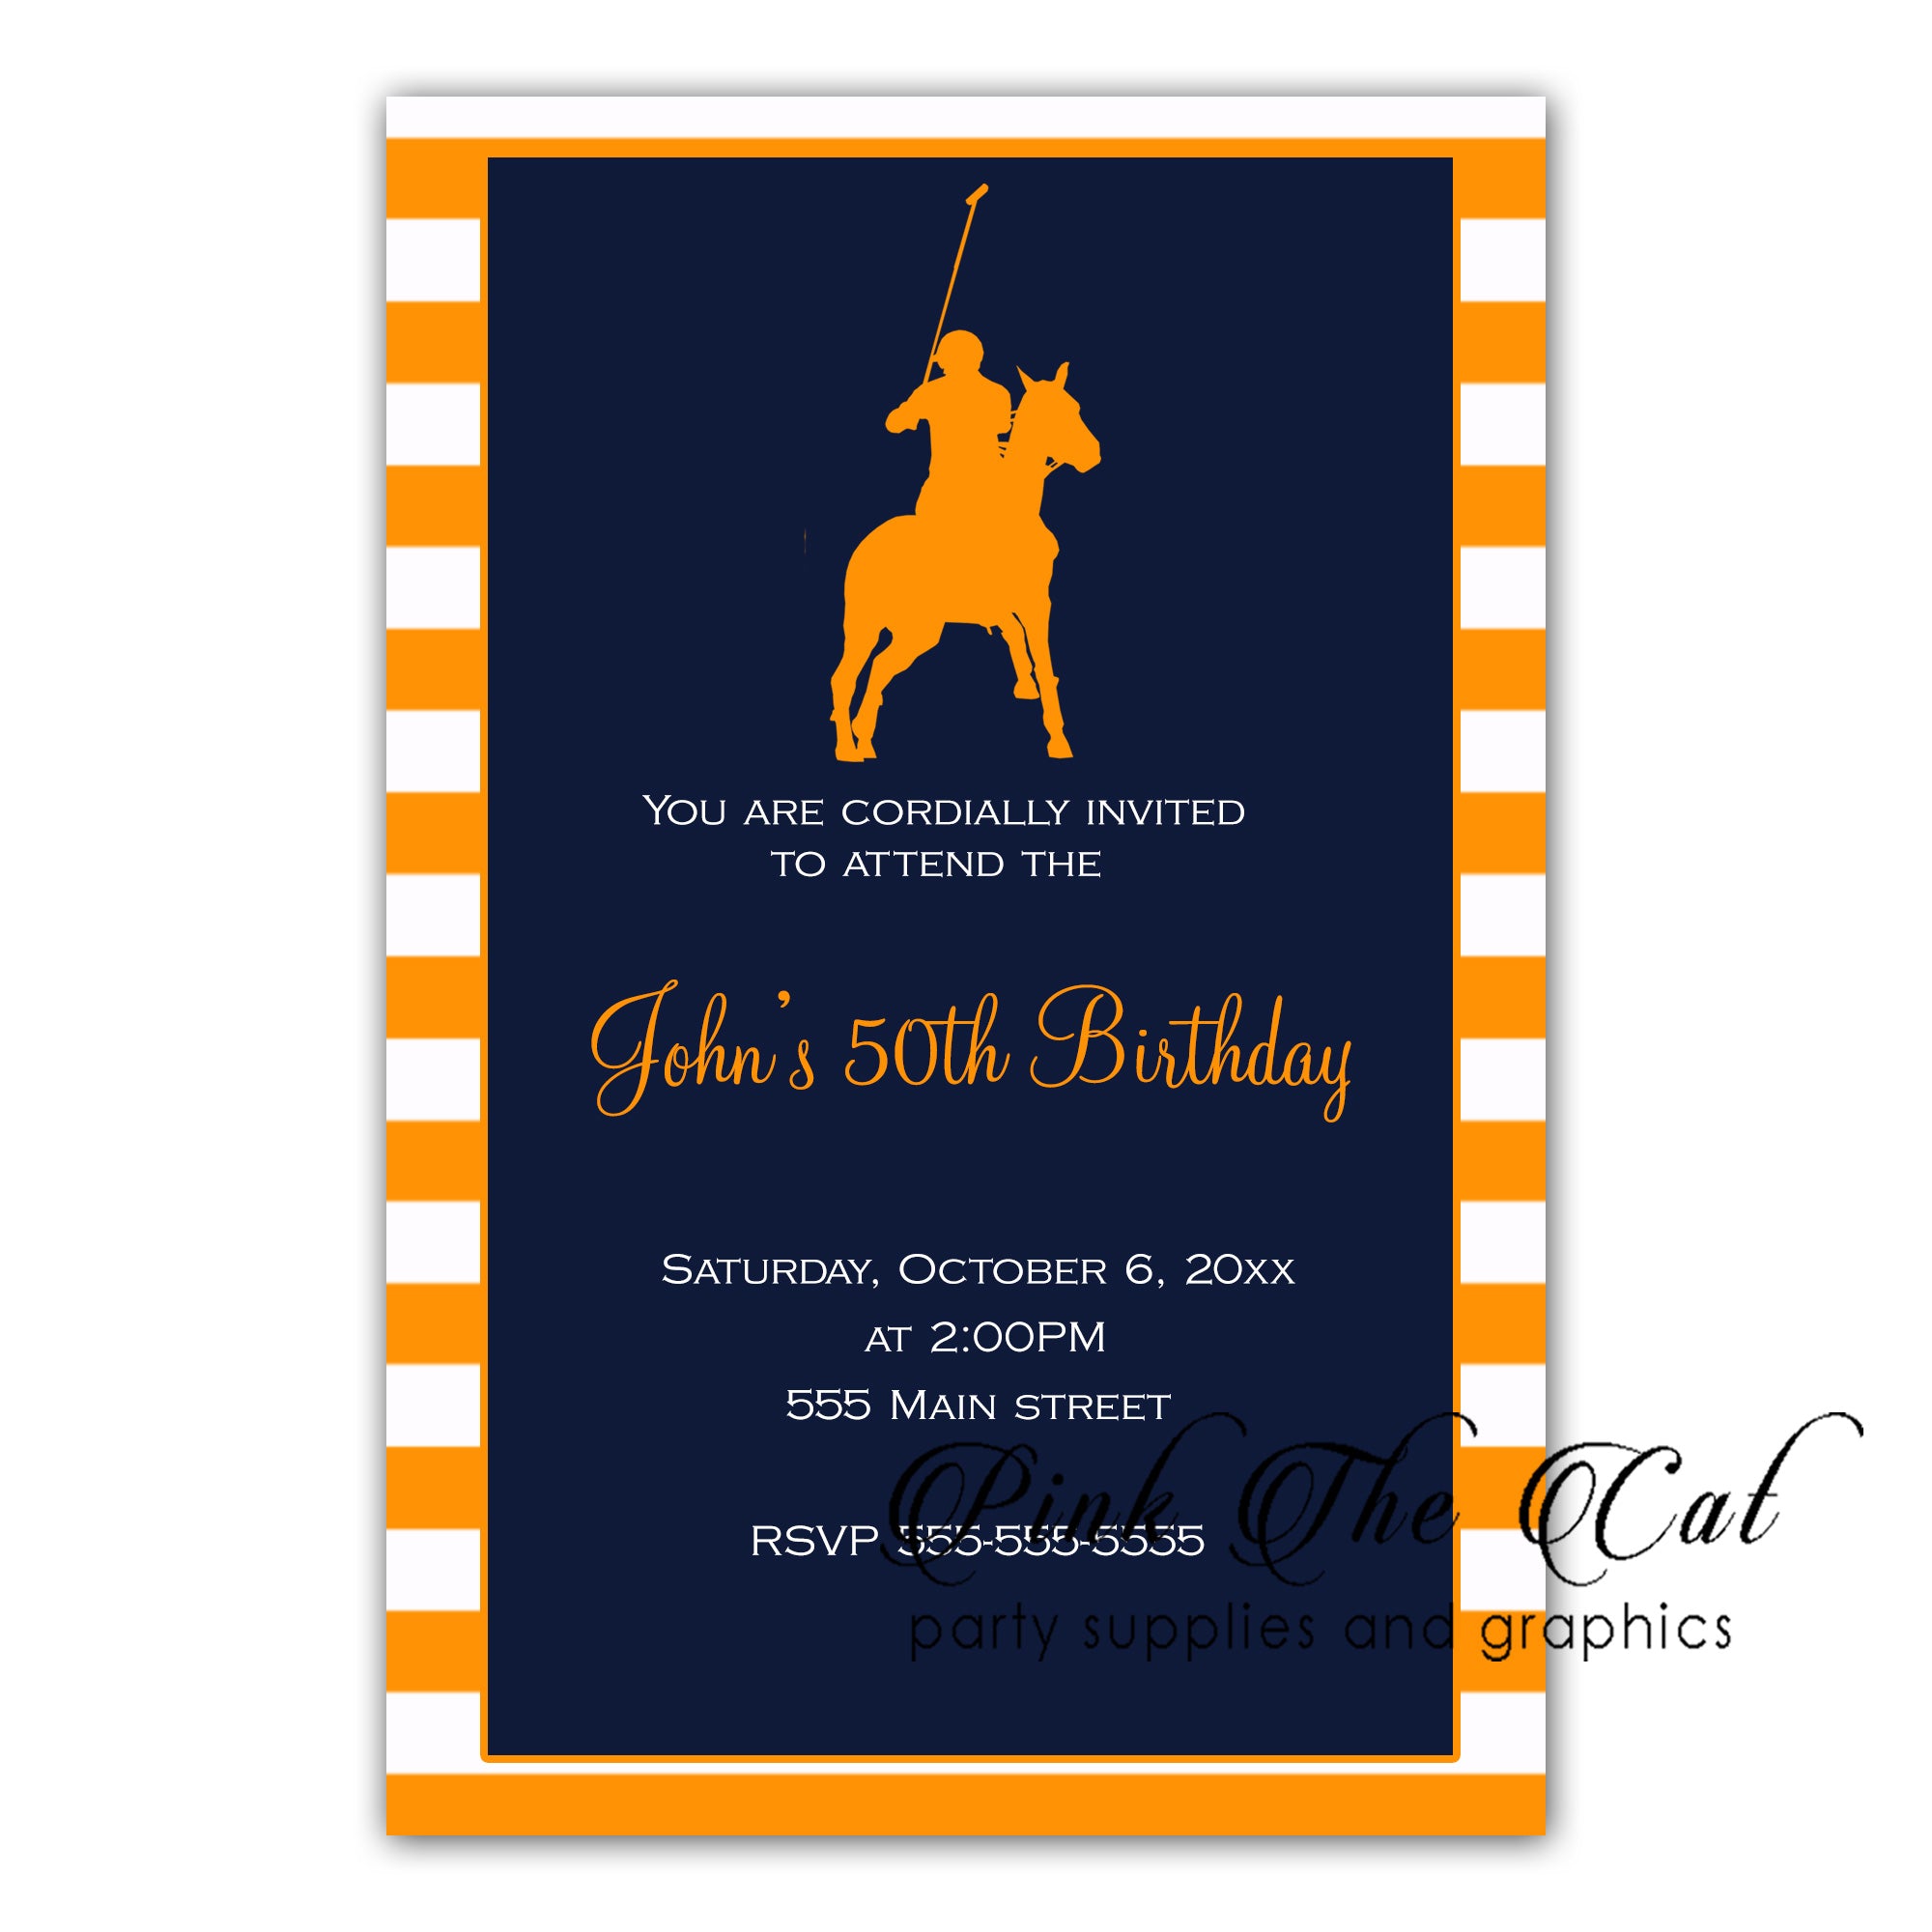 Polo invitations orange navy blue birthday baby shower printable